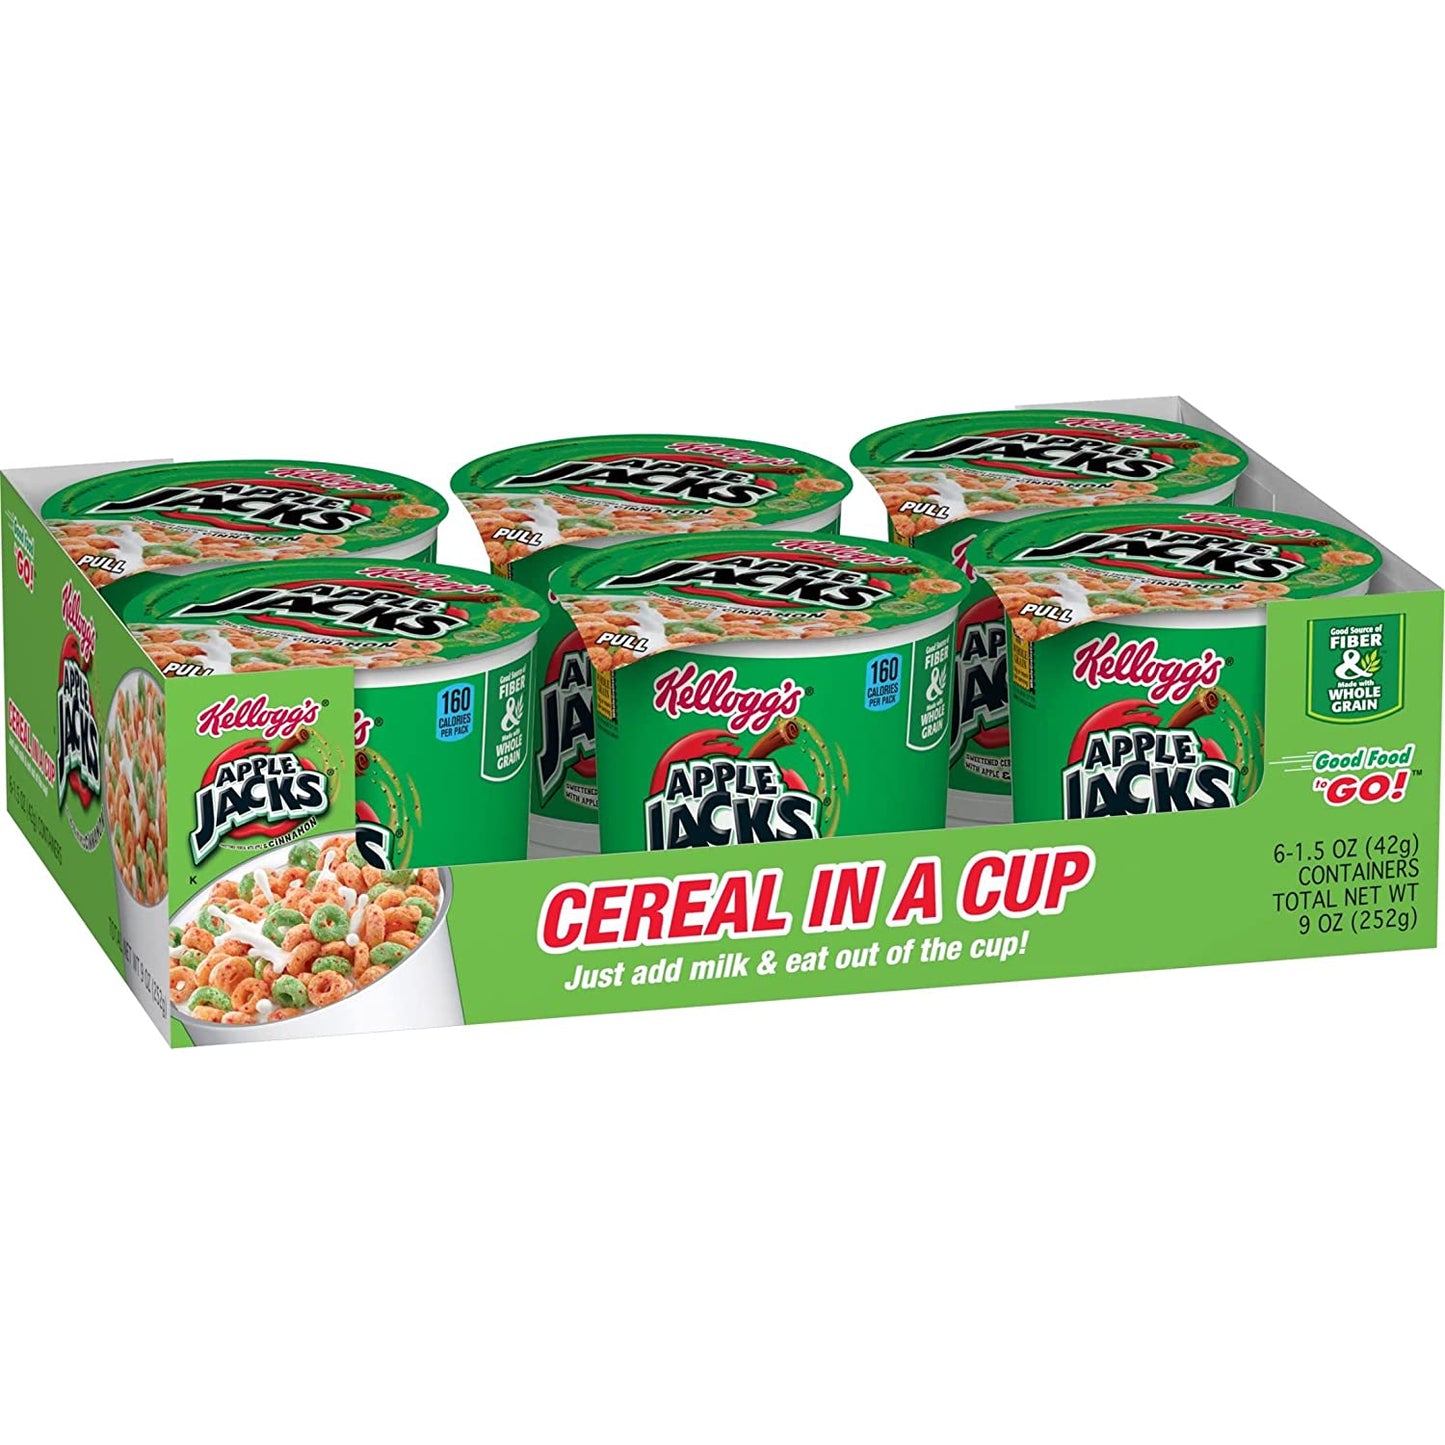 Kellogg’s Apple Jacks Cold Breakfast Cereal Cups, 8 Vitamins and Minerals, Kids Snacks, Original (12 Cups)